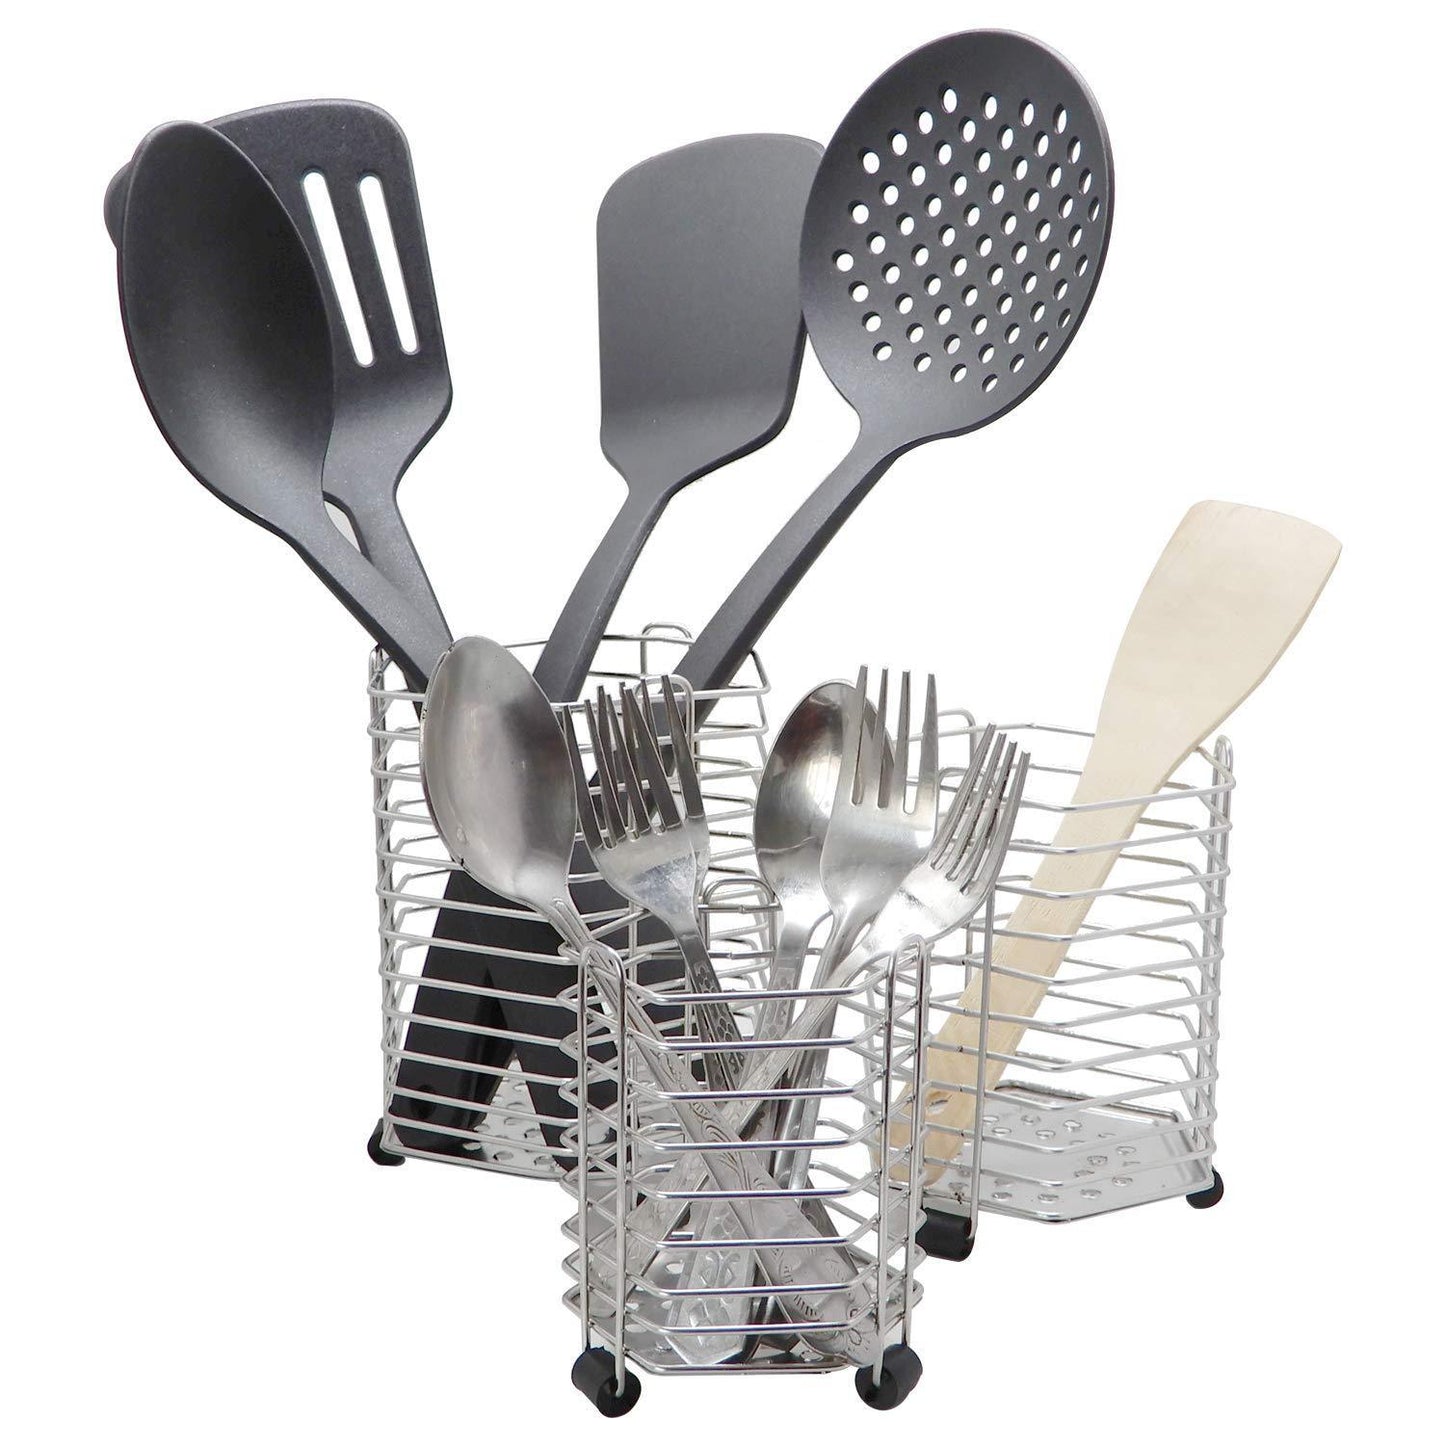 Latest bignay stainless steel kitchen utensil holder caddy holder brushed stainless steel cookware cutlery utensil holder pack of 3